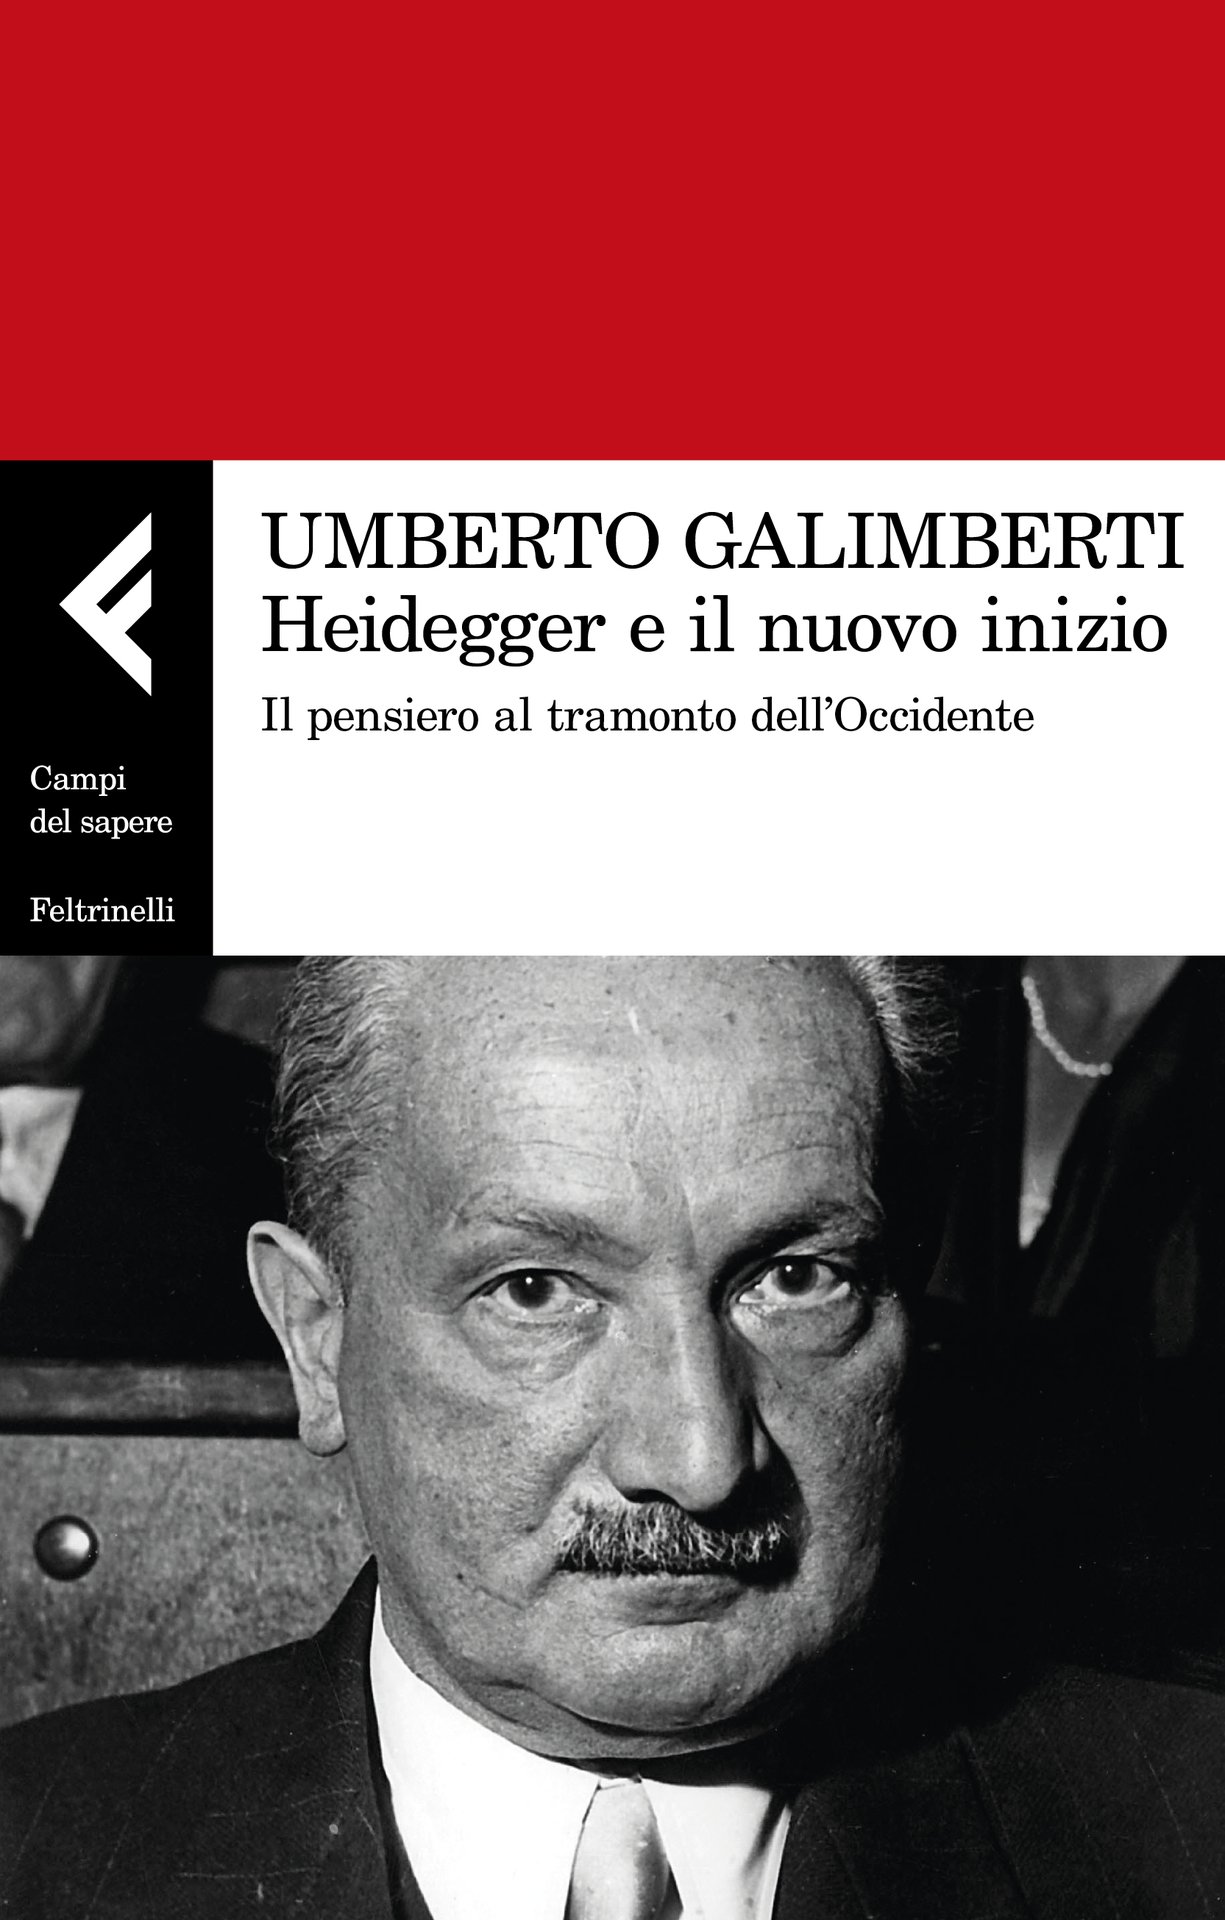 Umberto Galimberti: una Lectio Magistralis sul pensiero di Martin Heidegger